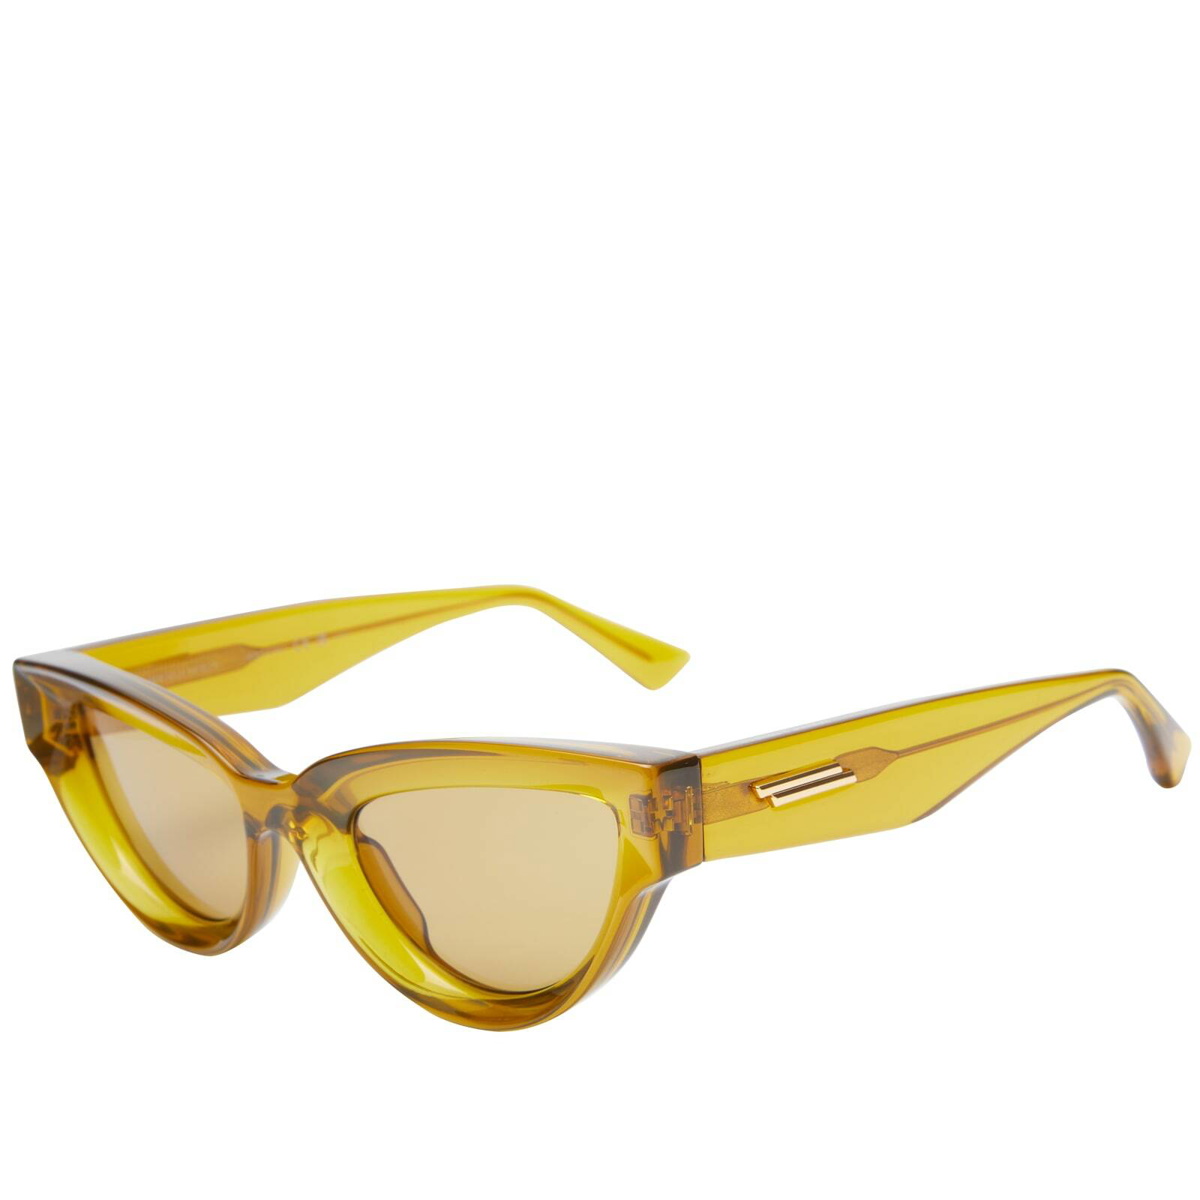 Bottega Veneta® Cangi Wraparound Injected Acetate Sunglasses in Yellow /  Bronze. Shop online now.